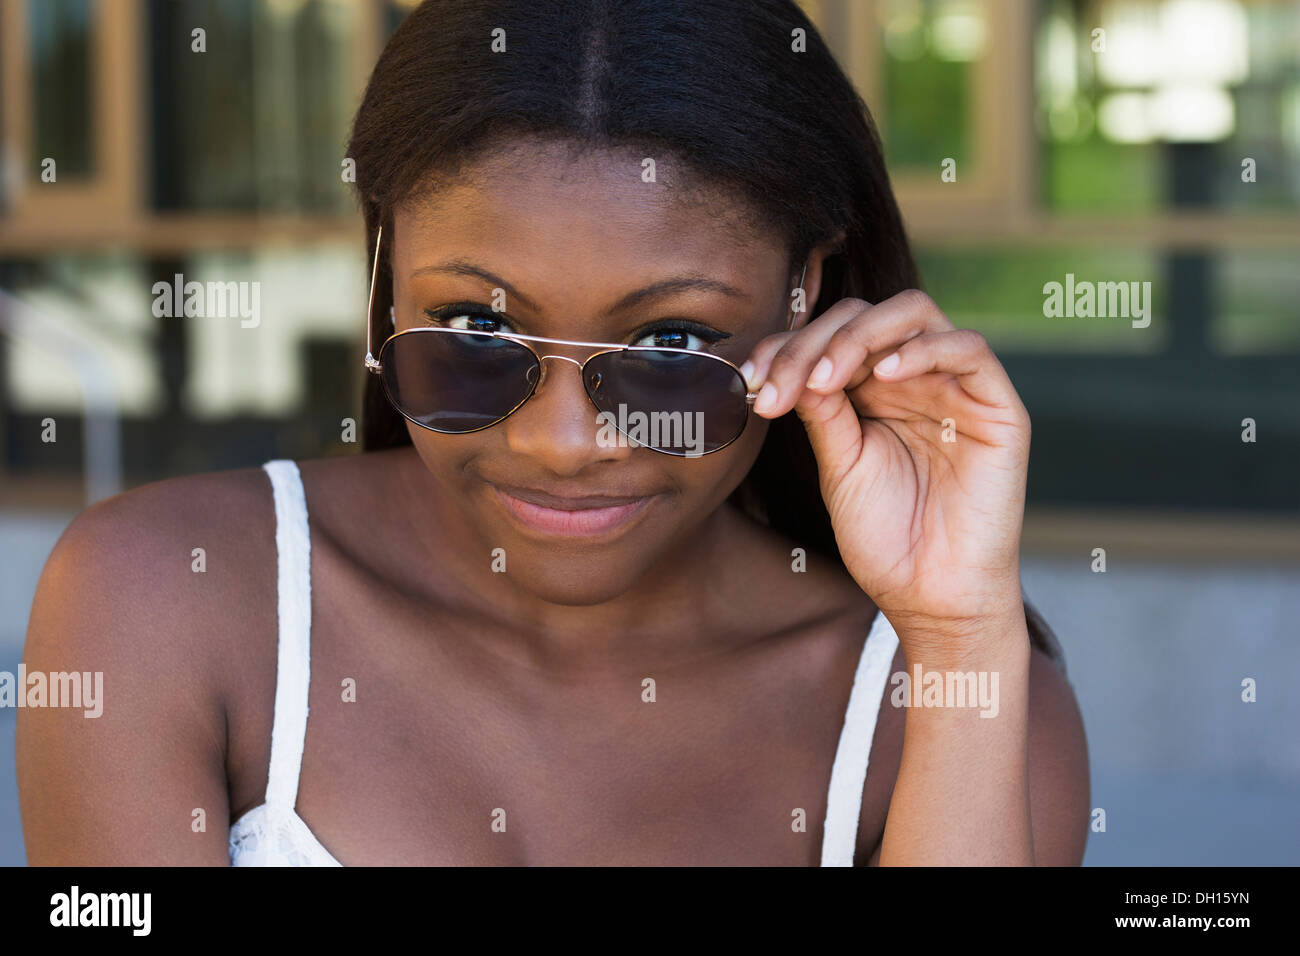 Black girl wearing sunglasses outdoors Stock Photo